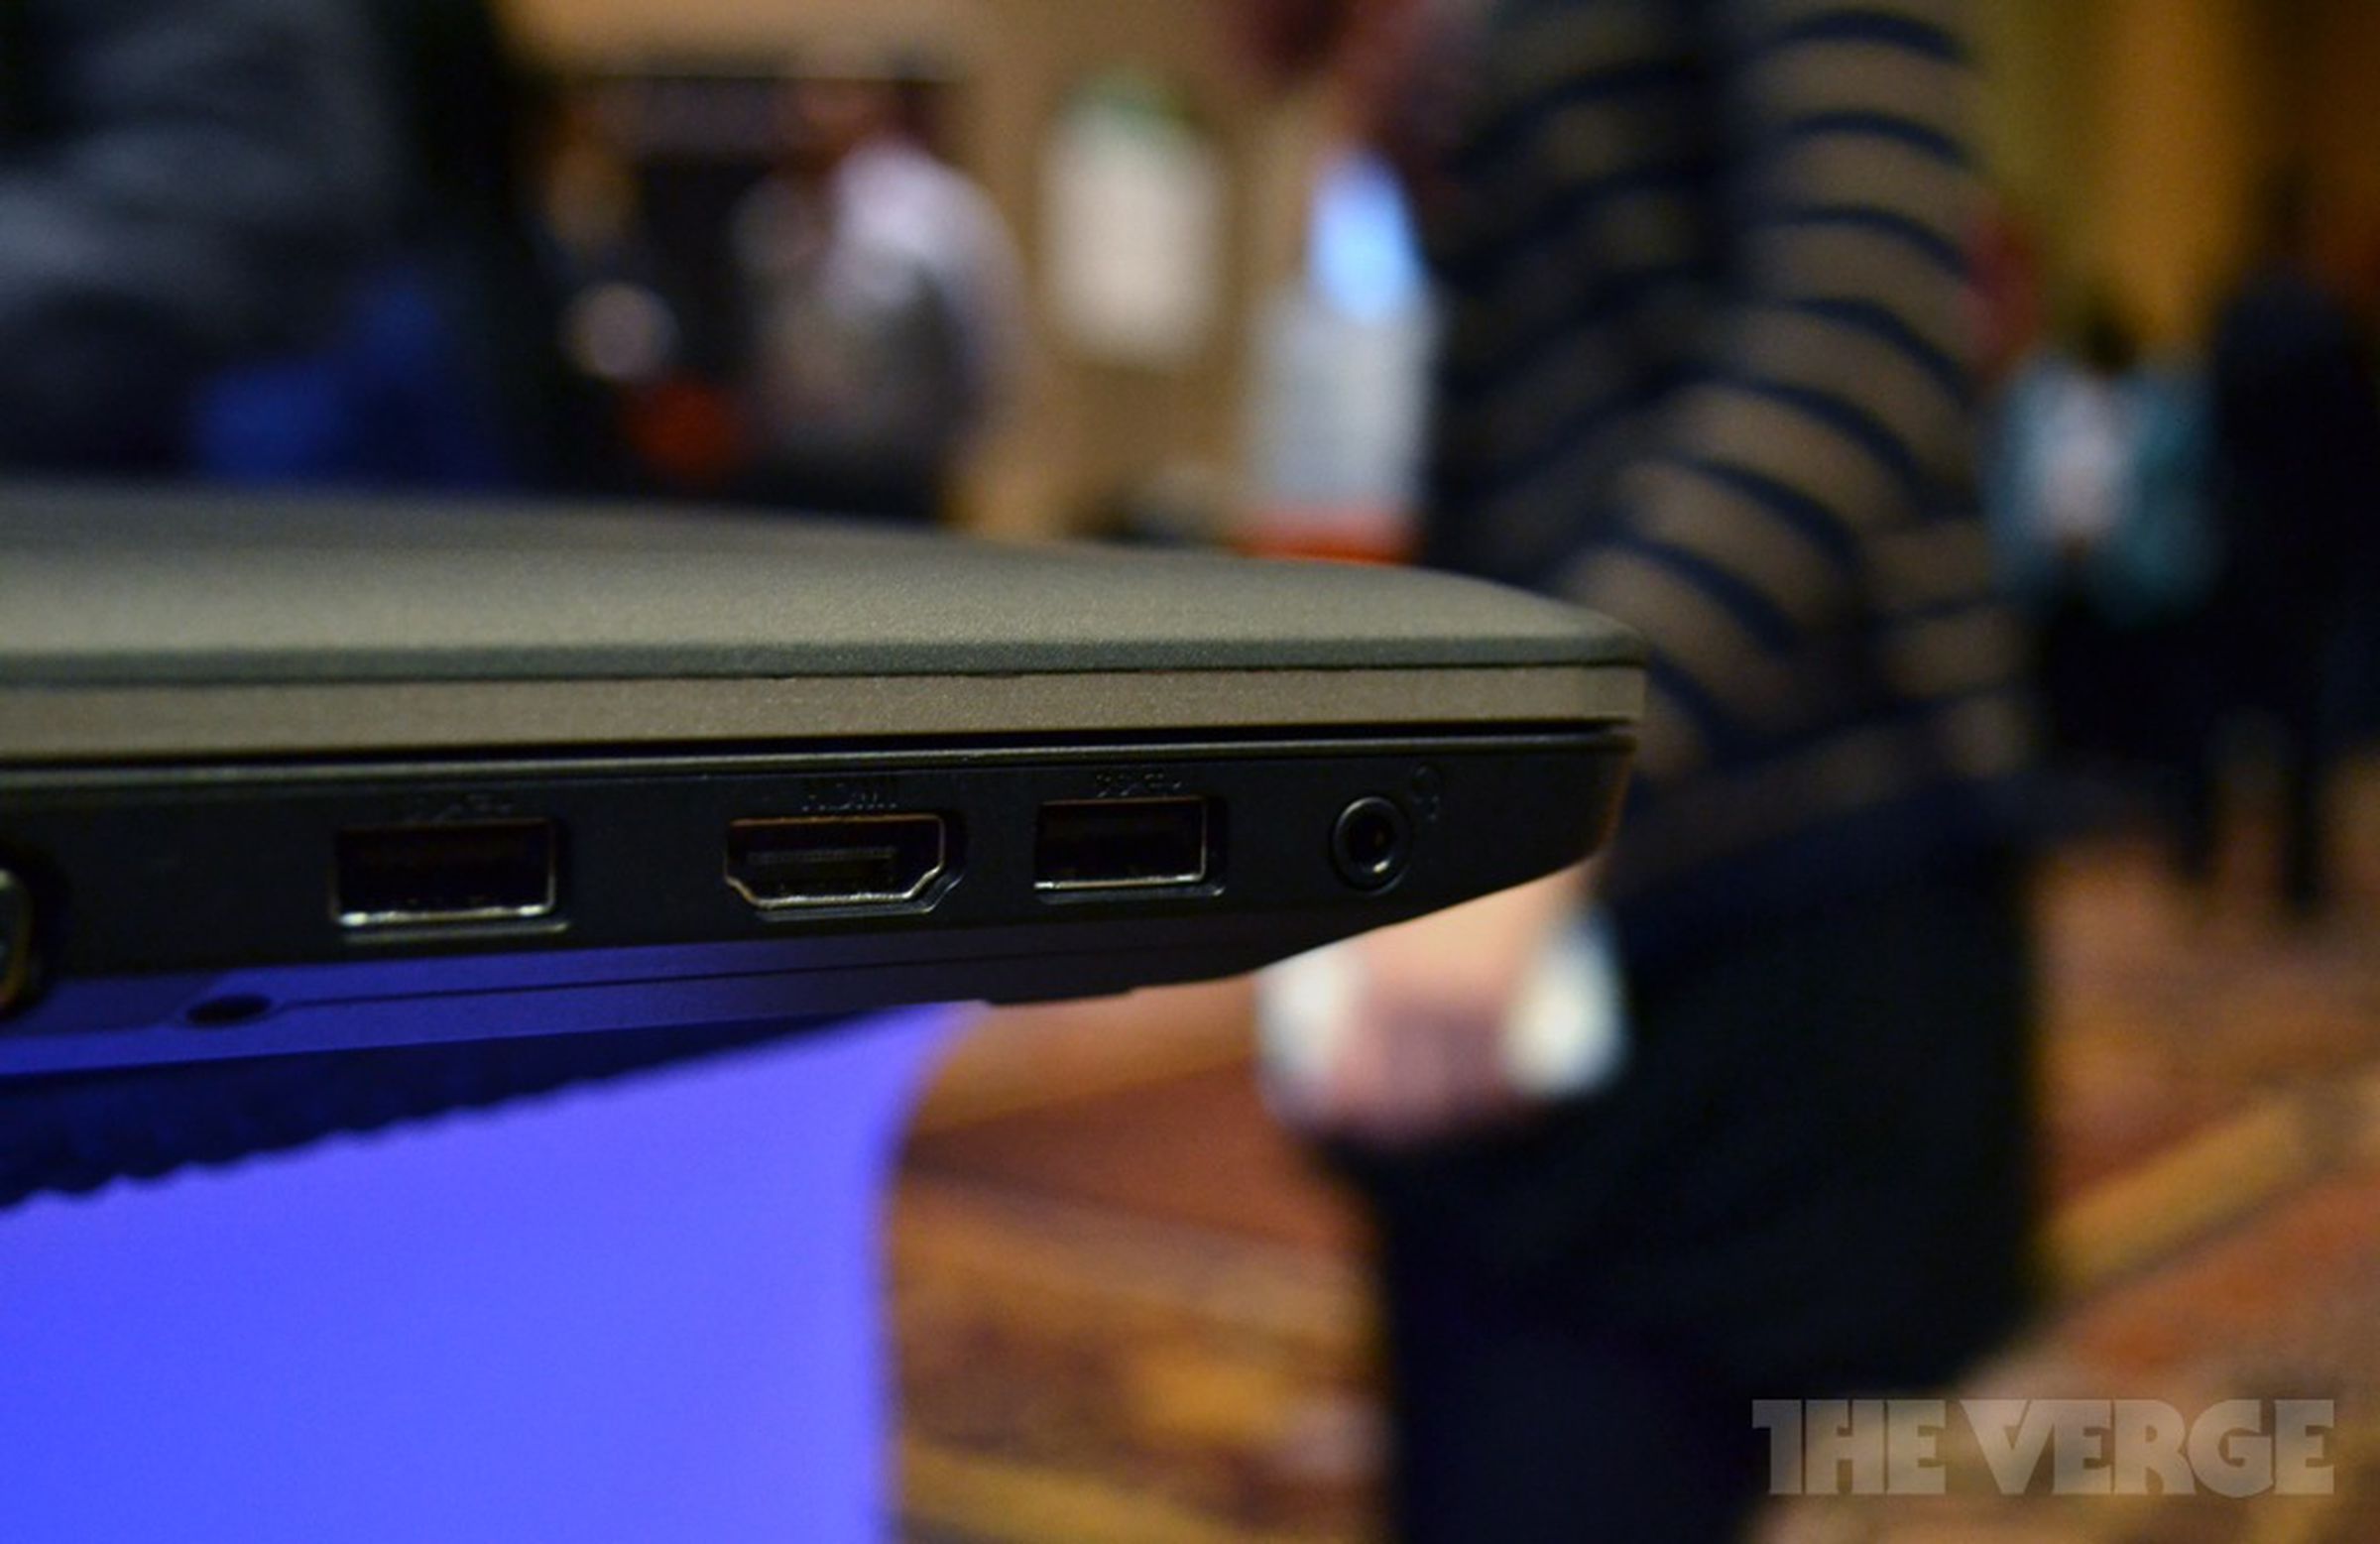 Lenovo ThinkPad Edge E431 hands-on